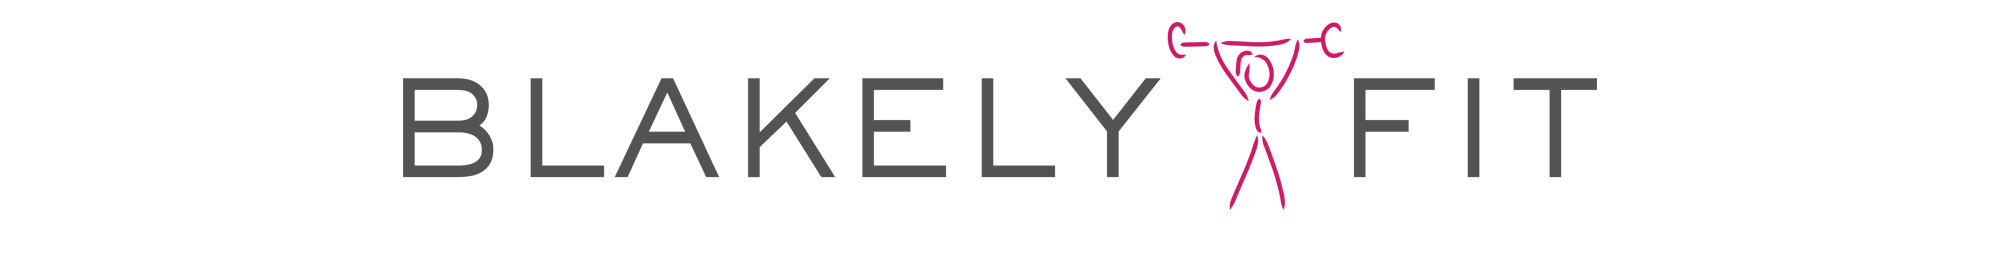 blakely-fit-logo